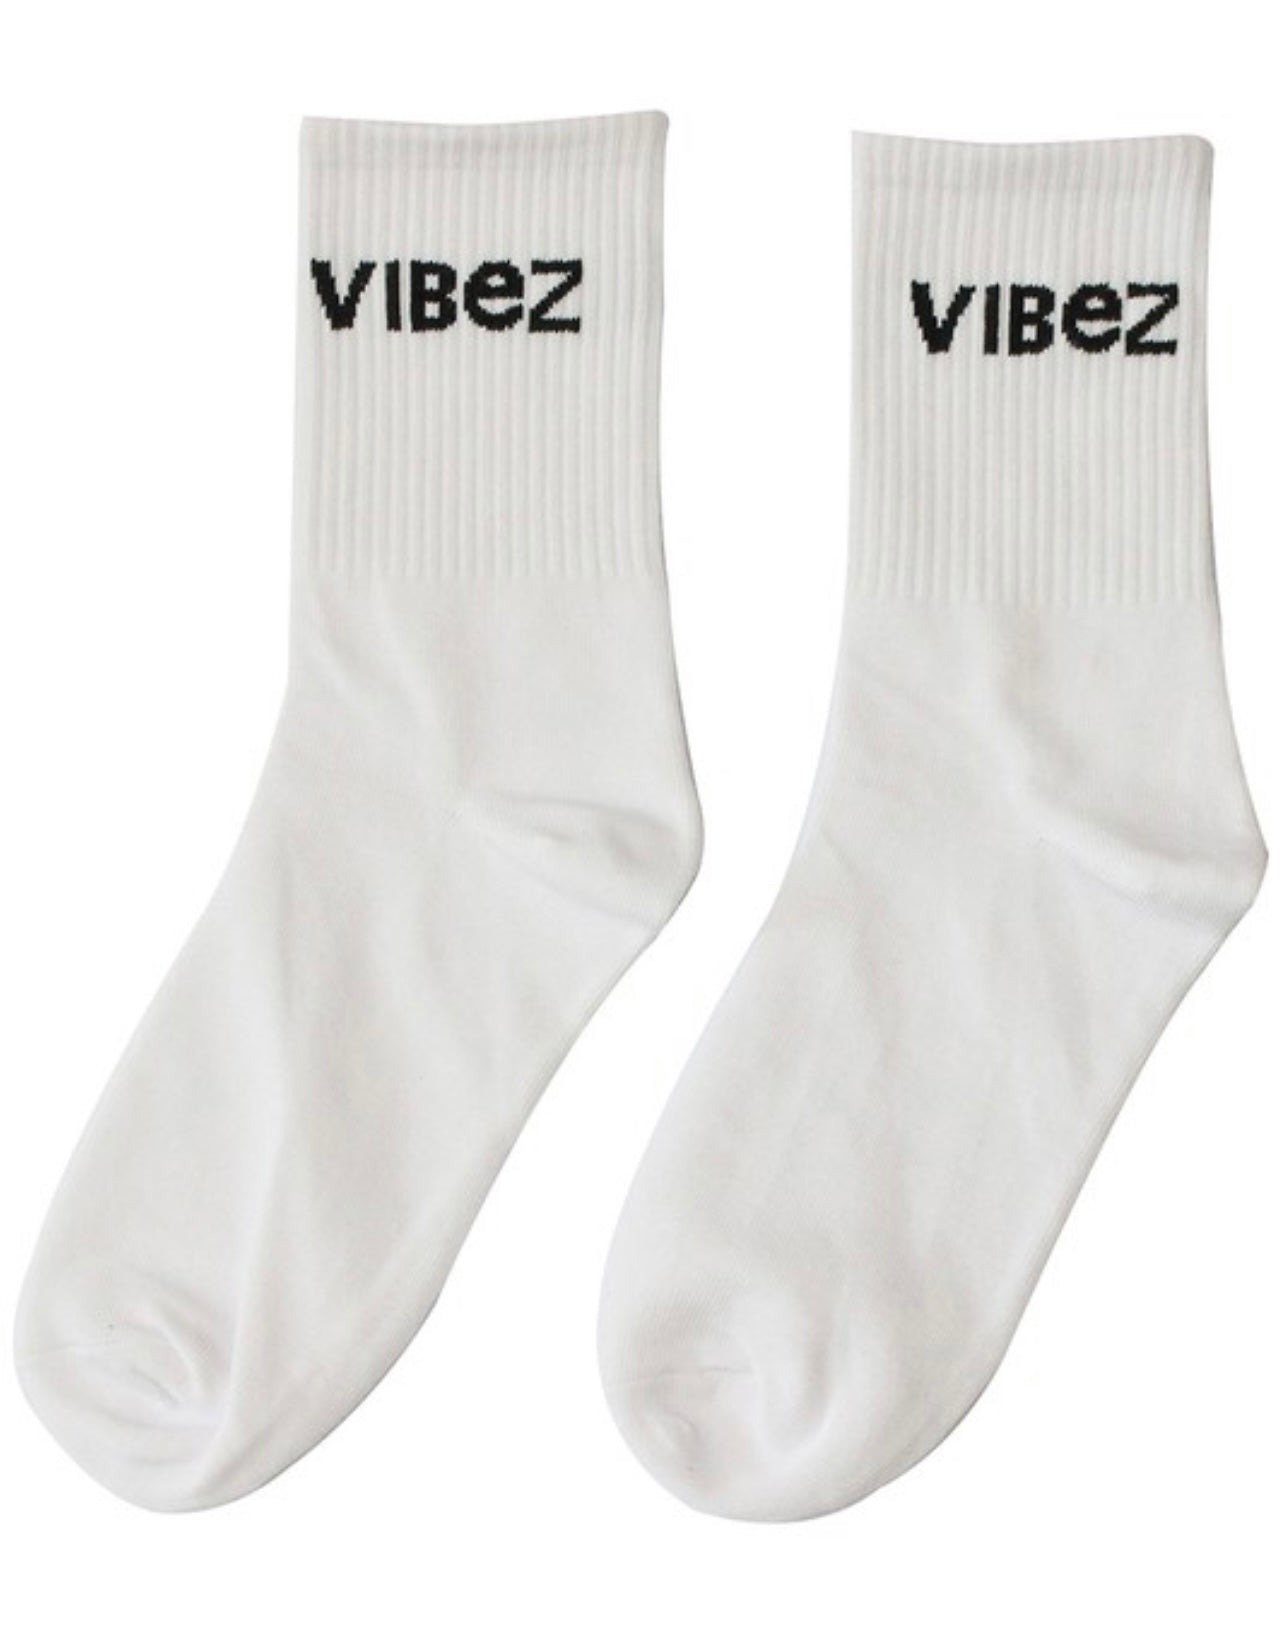 White socks, vibez , vibez socks ,